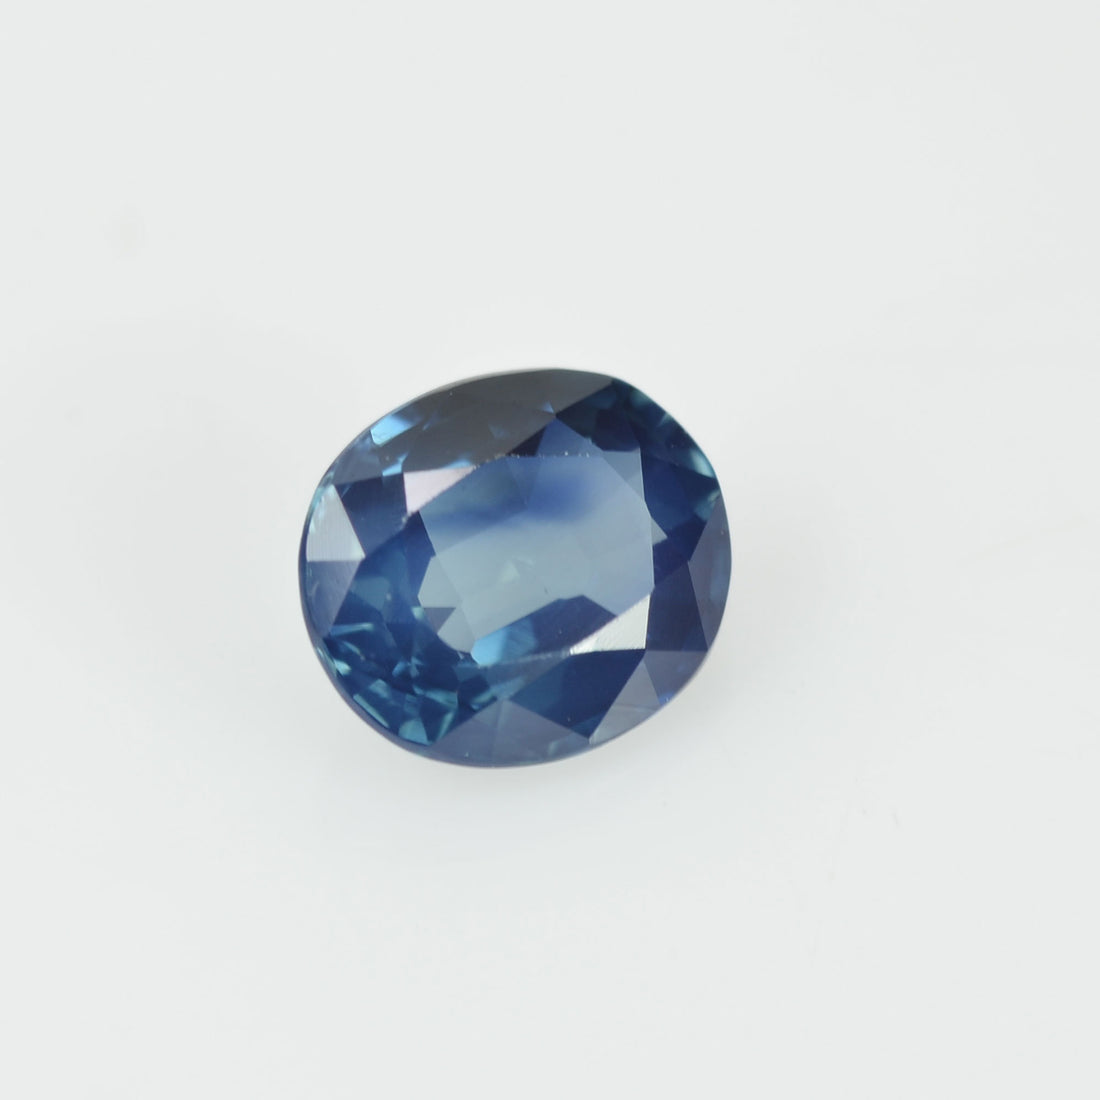 0.62 cts Natural Teal Blue Green Sapphire Loose Gemstone Oval Cut - Thai Gems Export Ltd.